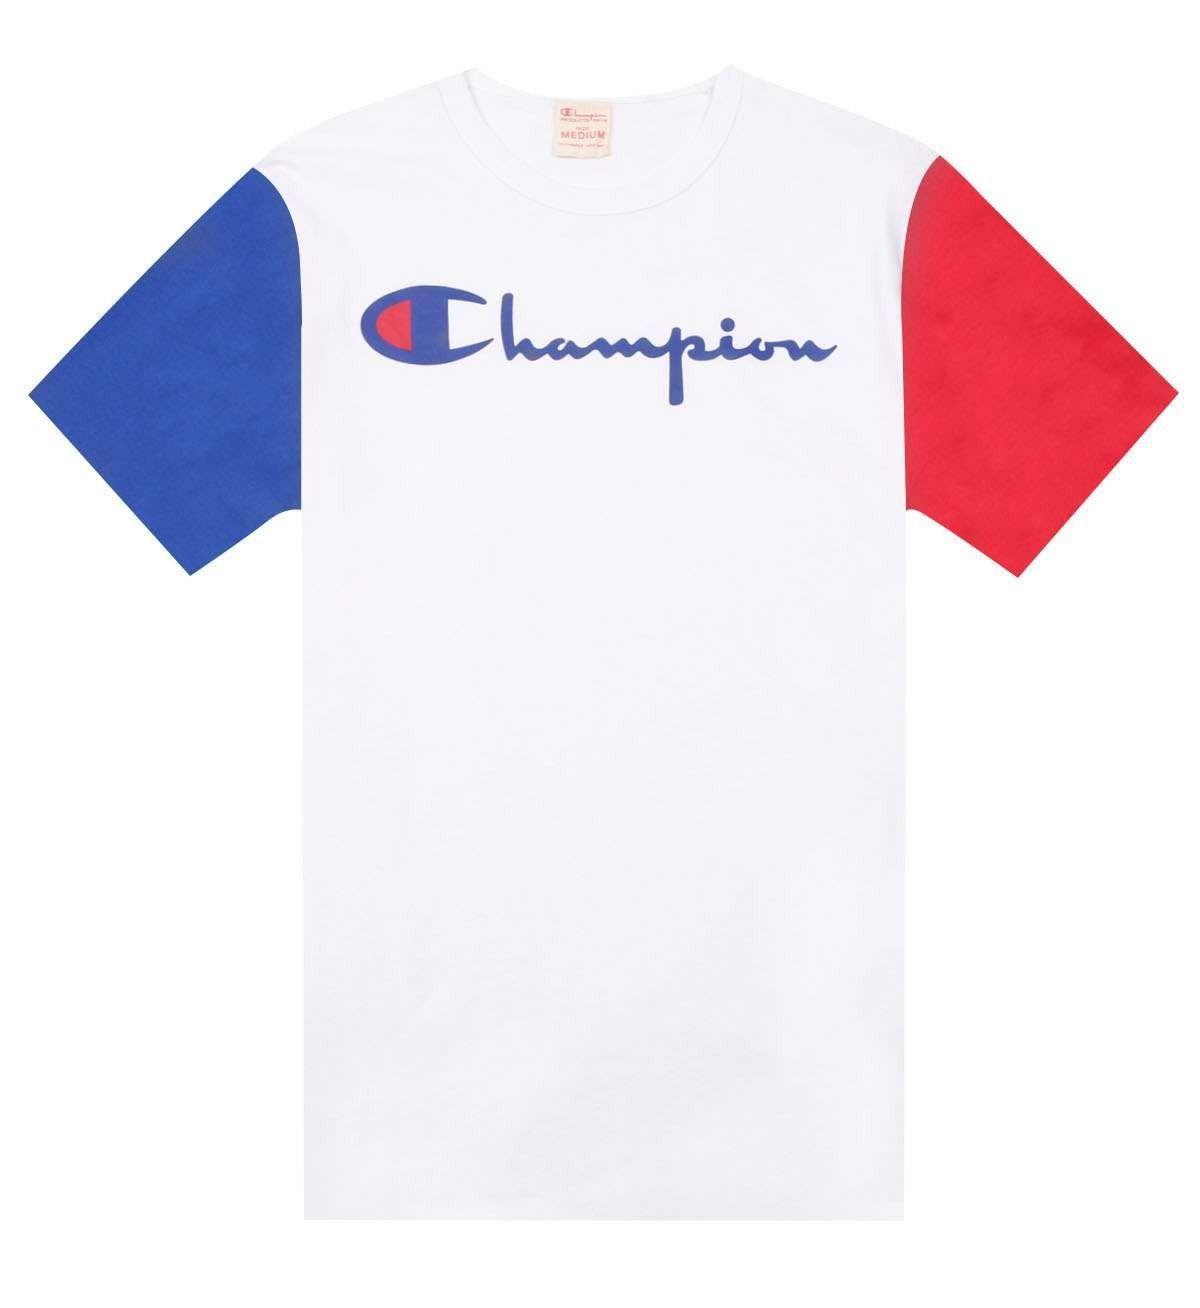 champion red blue and white sweatshirt